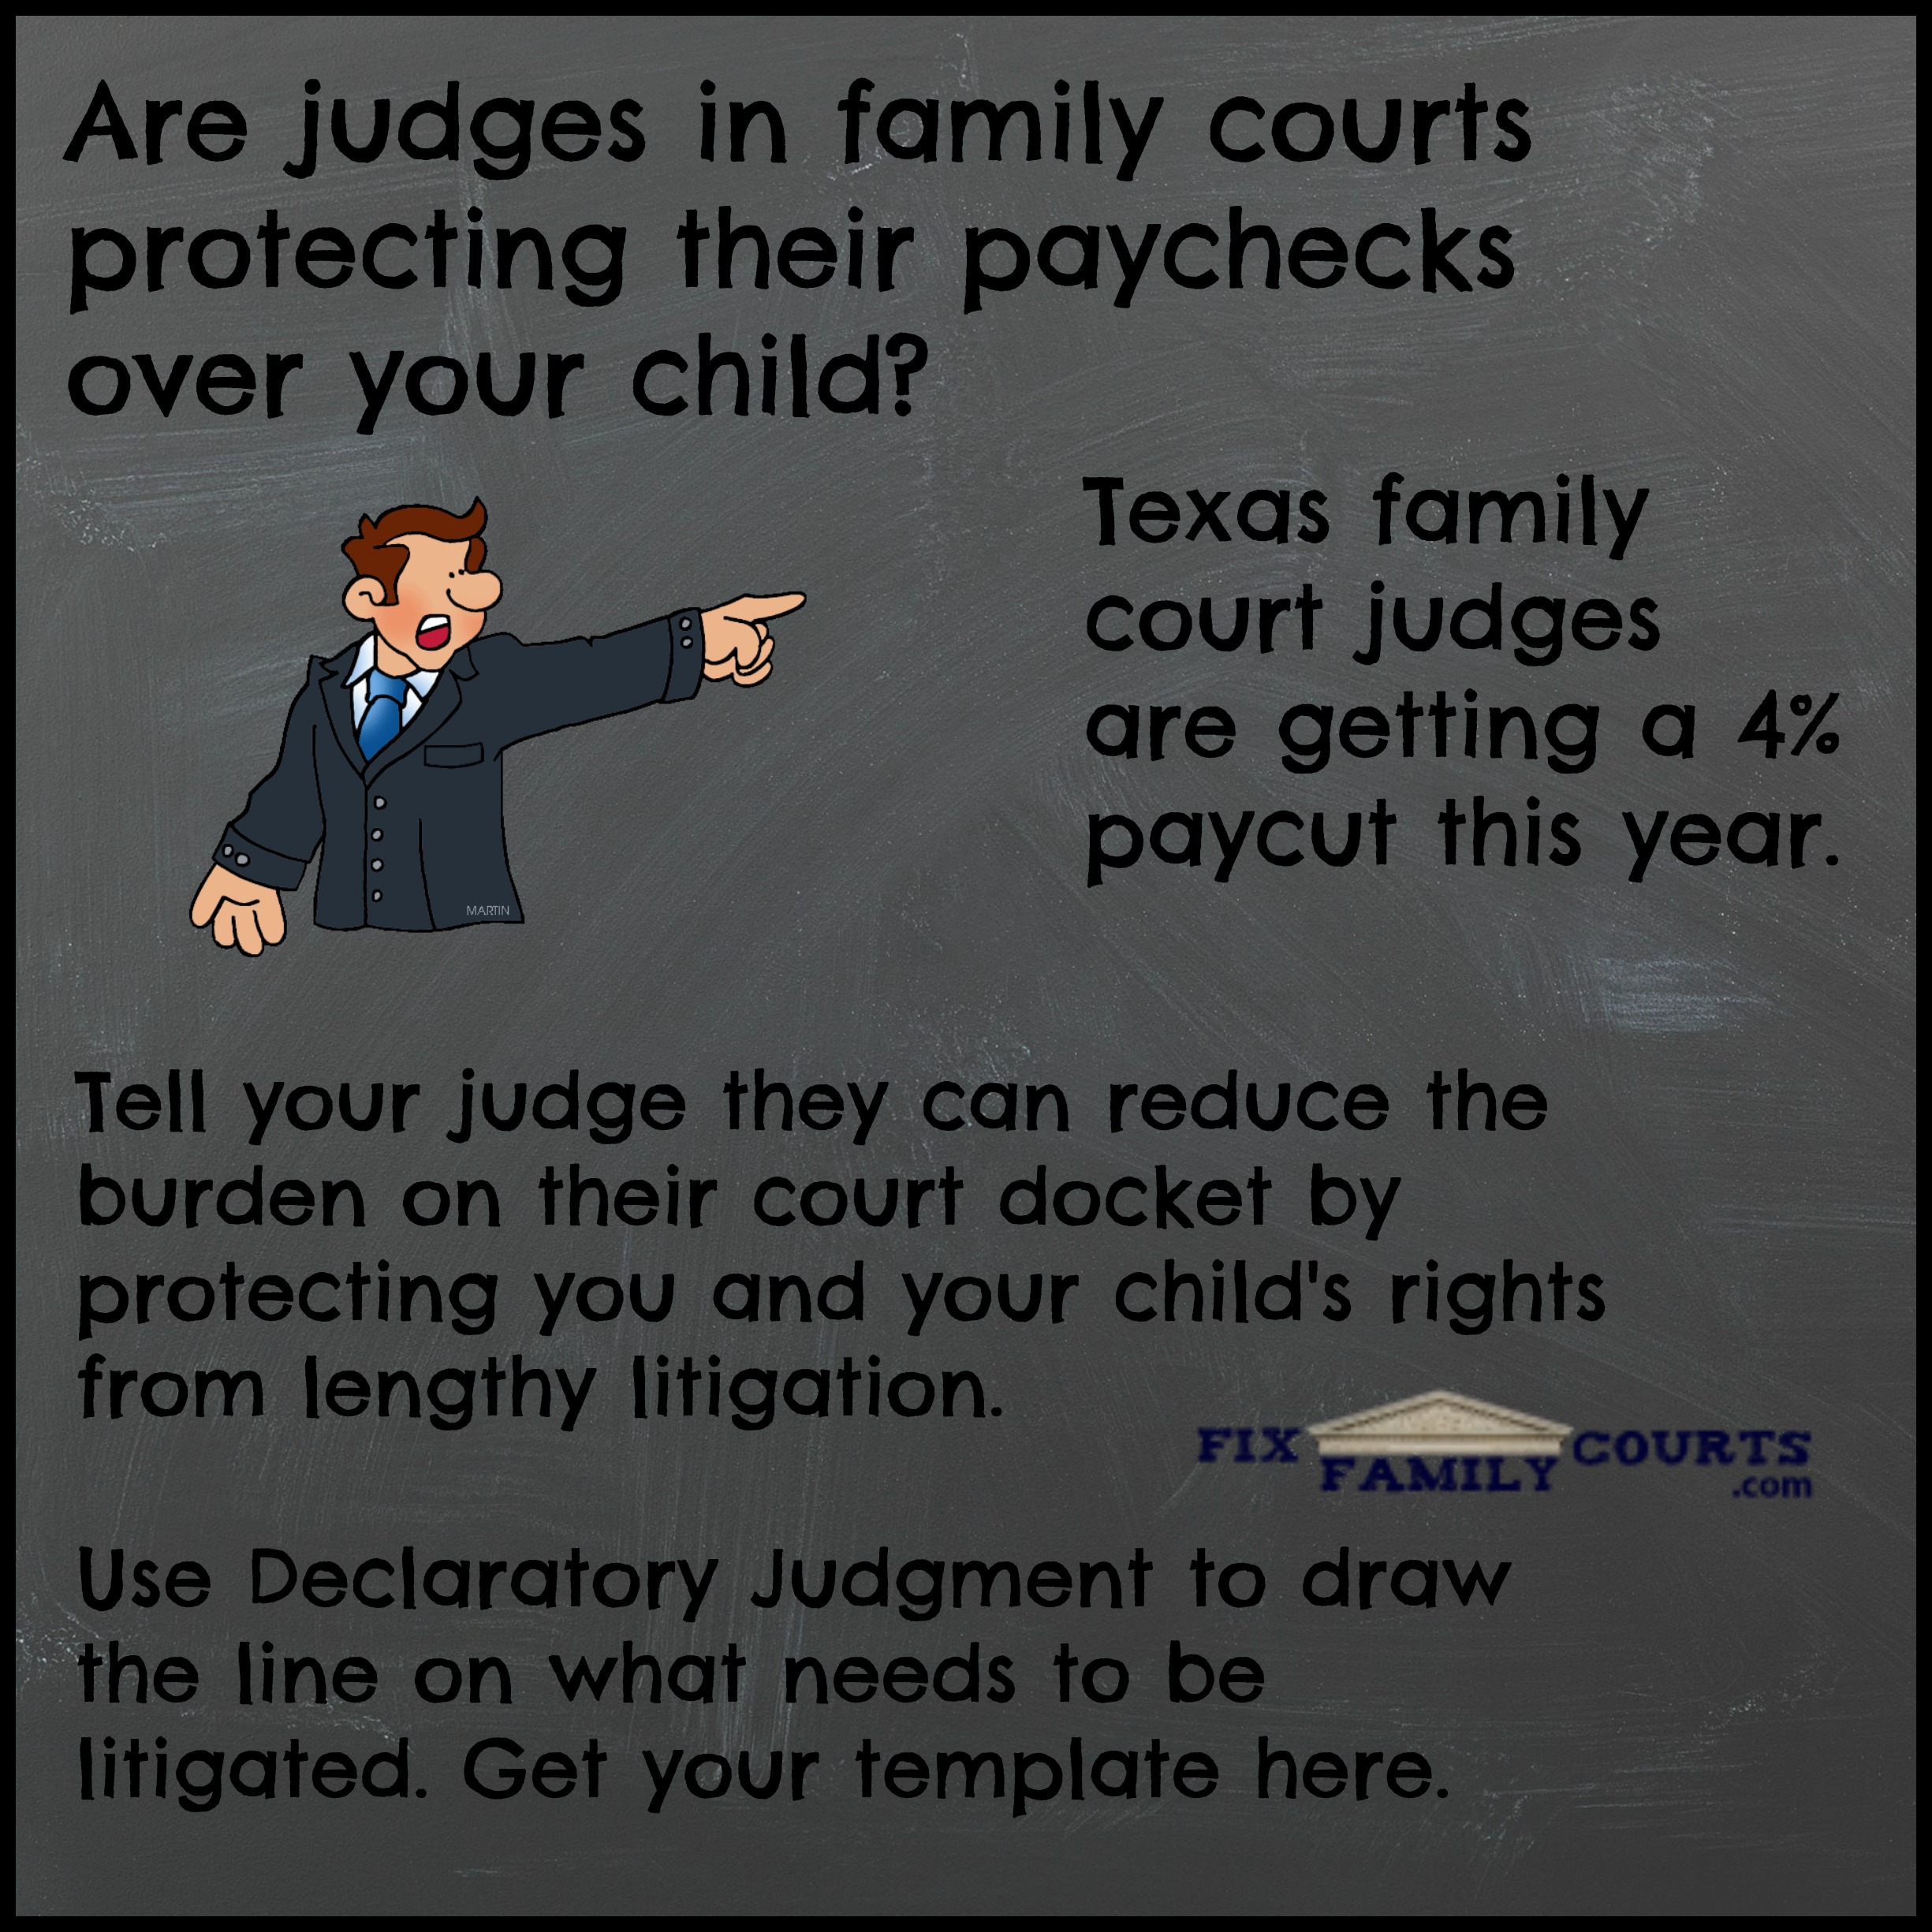 Judge paycuts